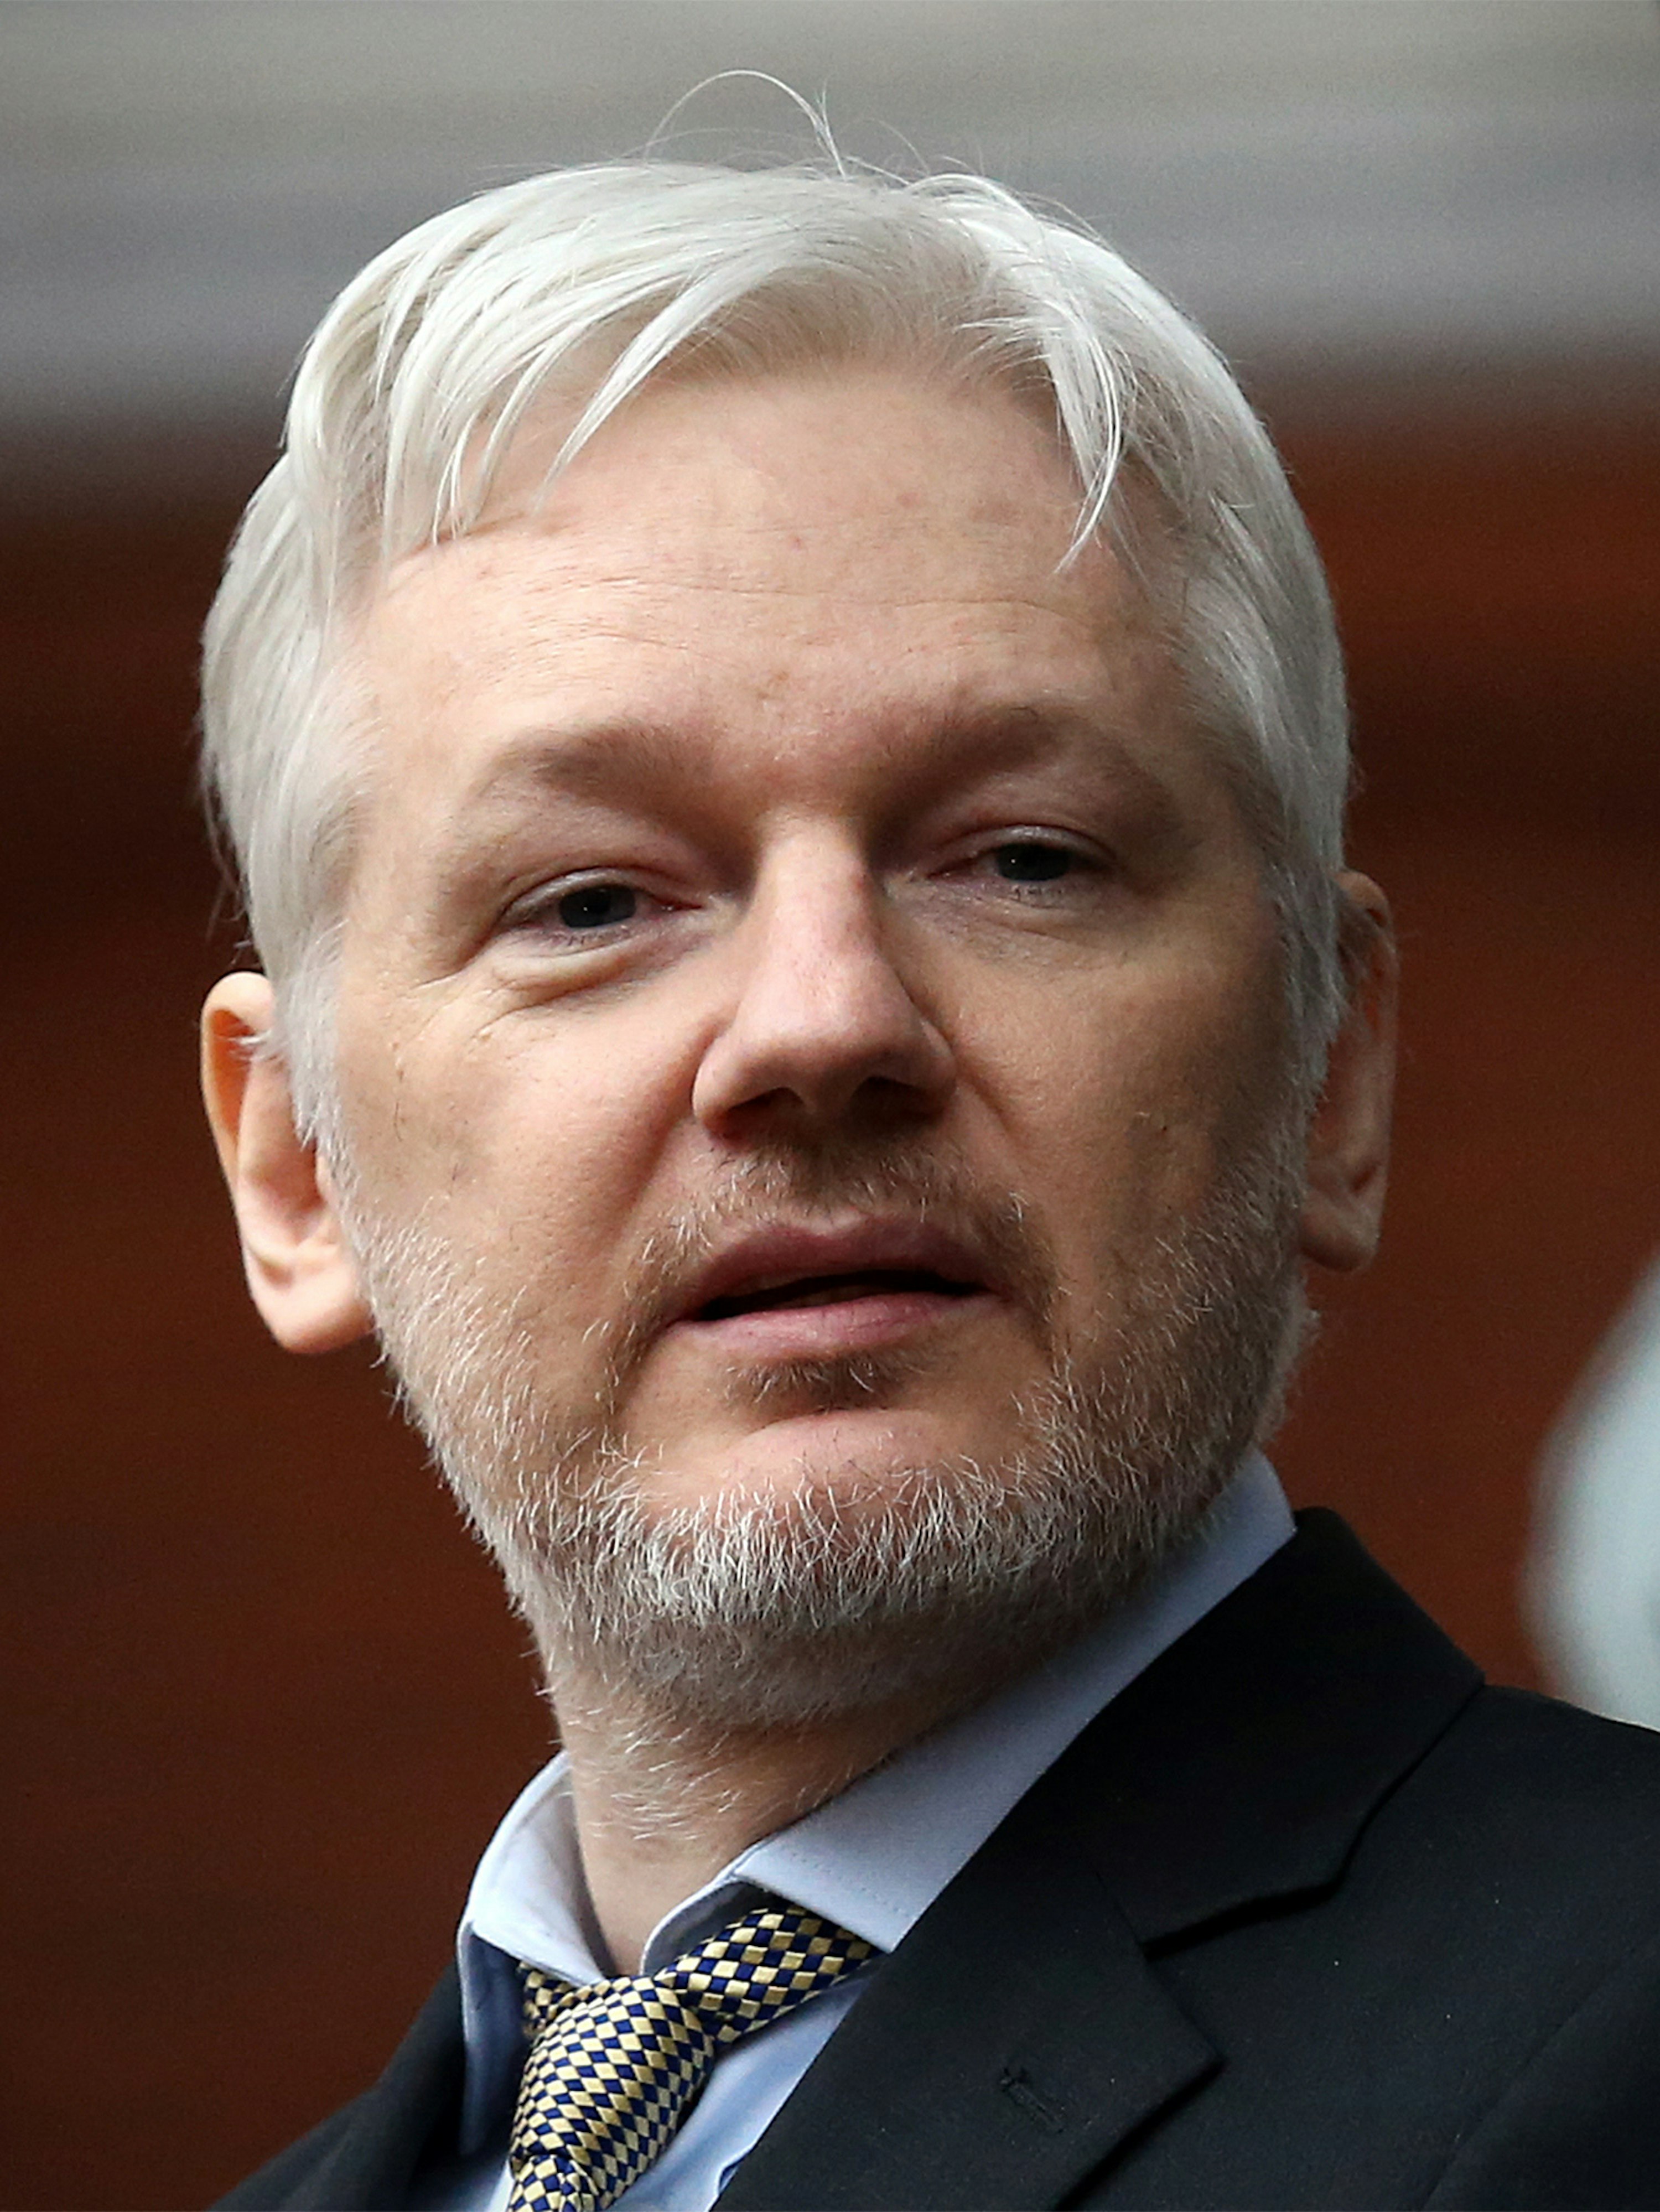 Julian Assange Gets Grilled on Reddit Over WikiLeaks Ties 